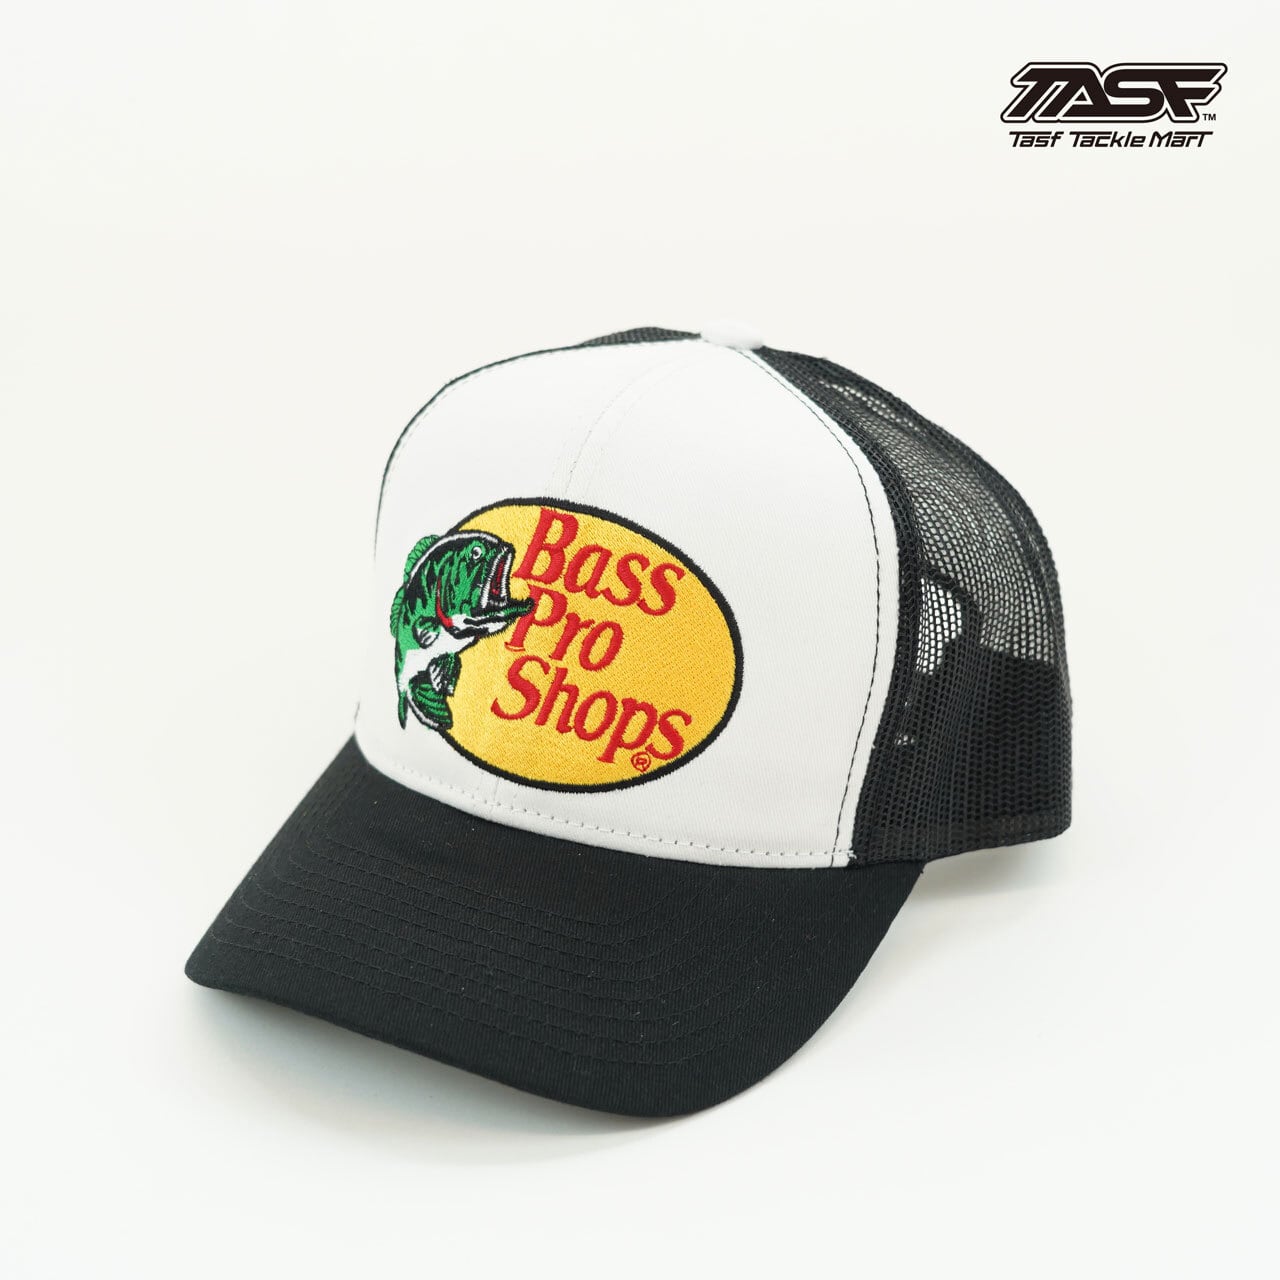 BASS PRO SHOPS / Embroidered MESH CAP / Black | Tasf Tackle Mart